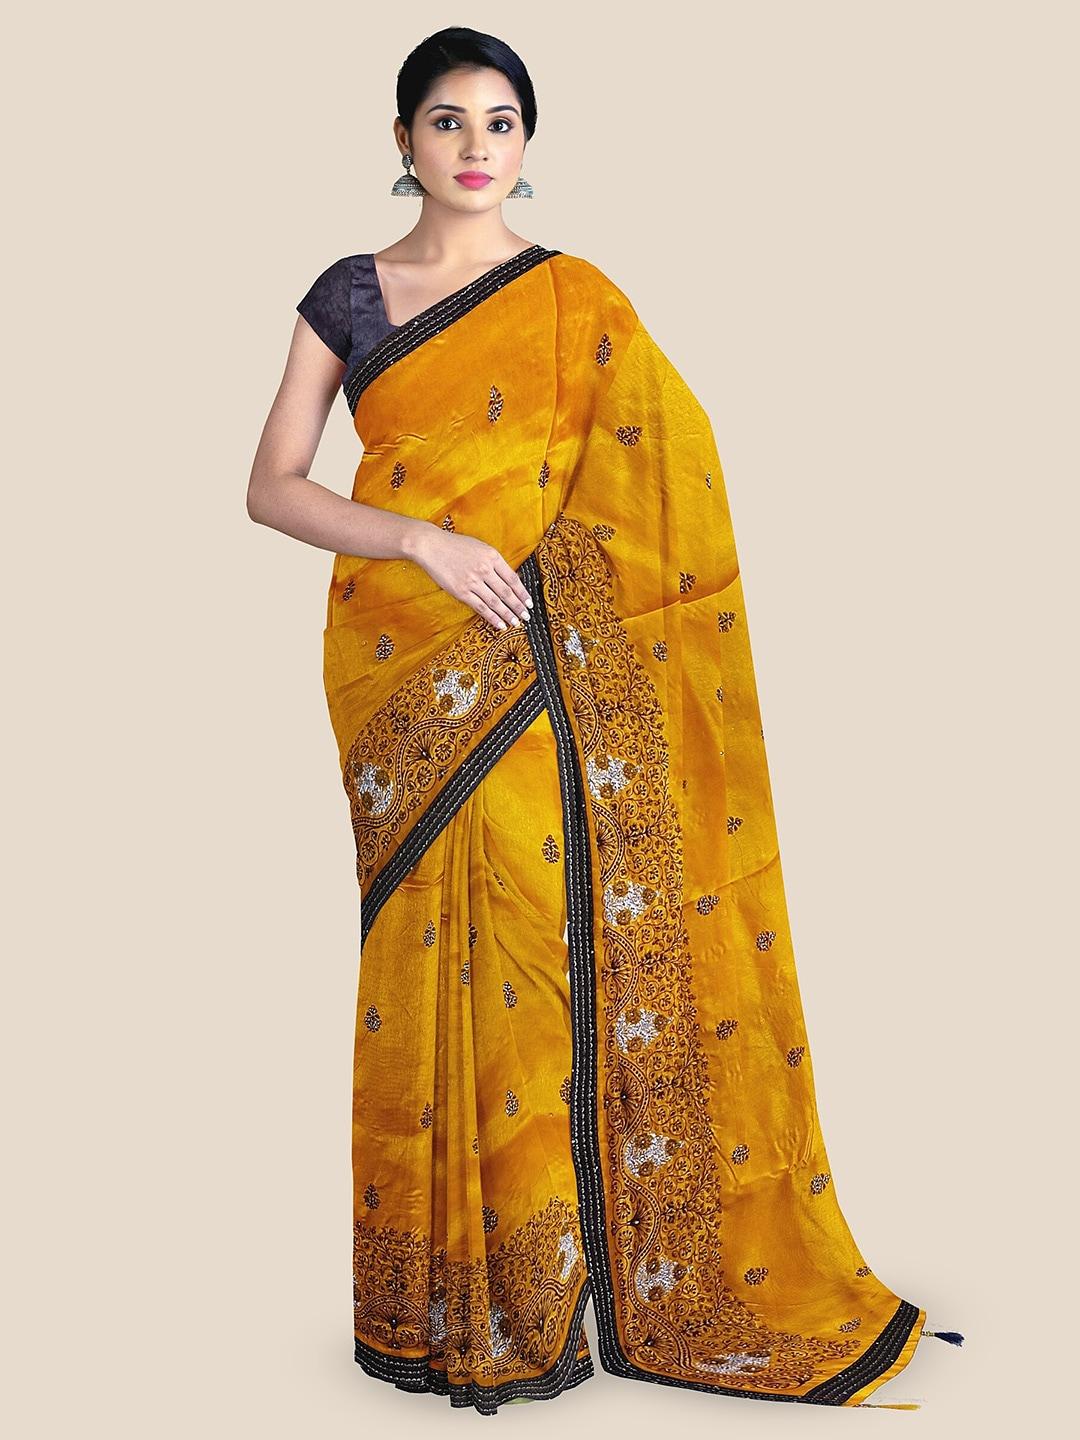 The Chennai Silks Embroidered Saree